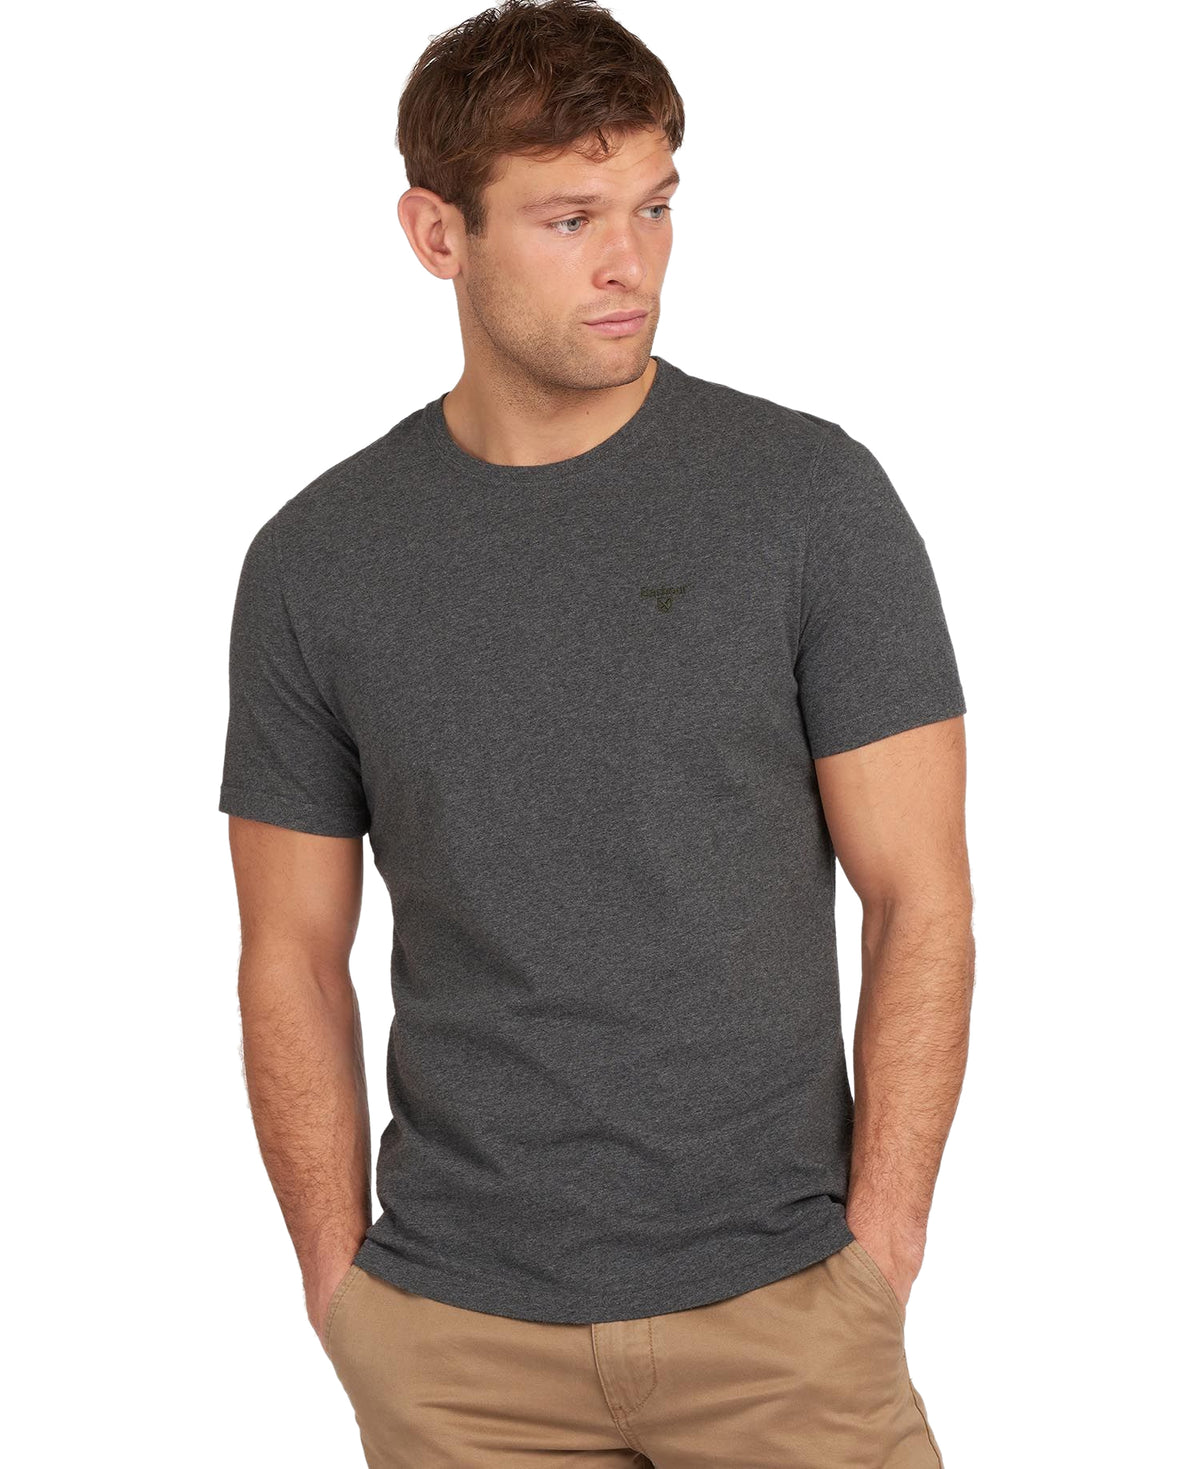 Barbour Men's Sports T-Shirt - Short Sleeved, 01, Mts0331, Slate Marl